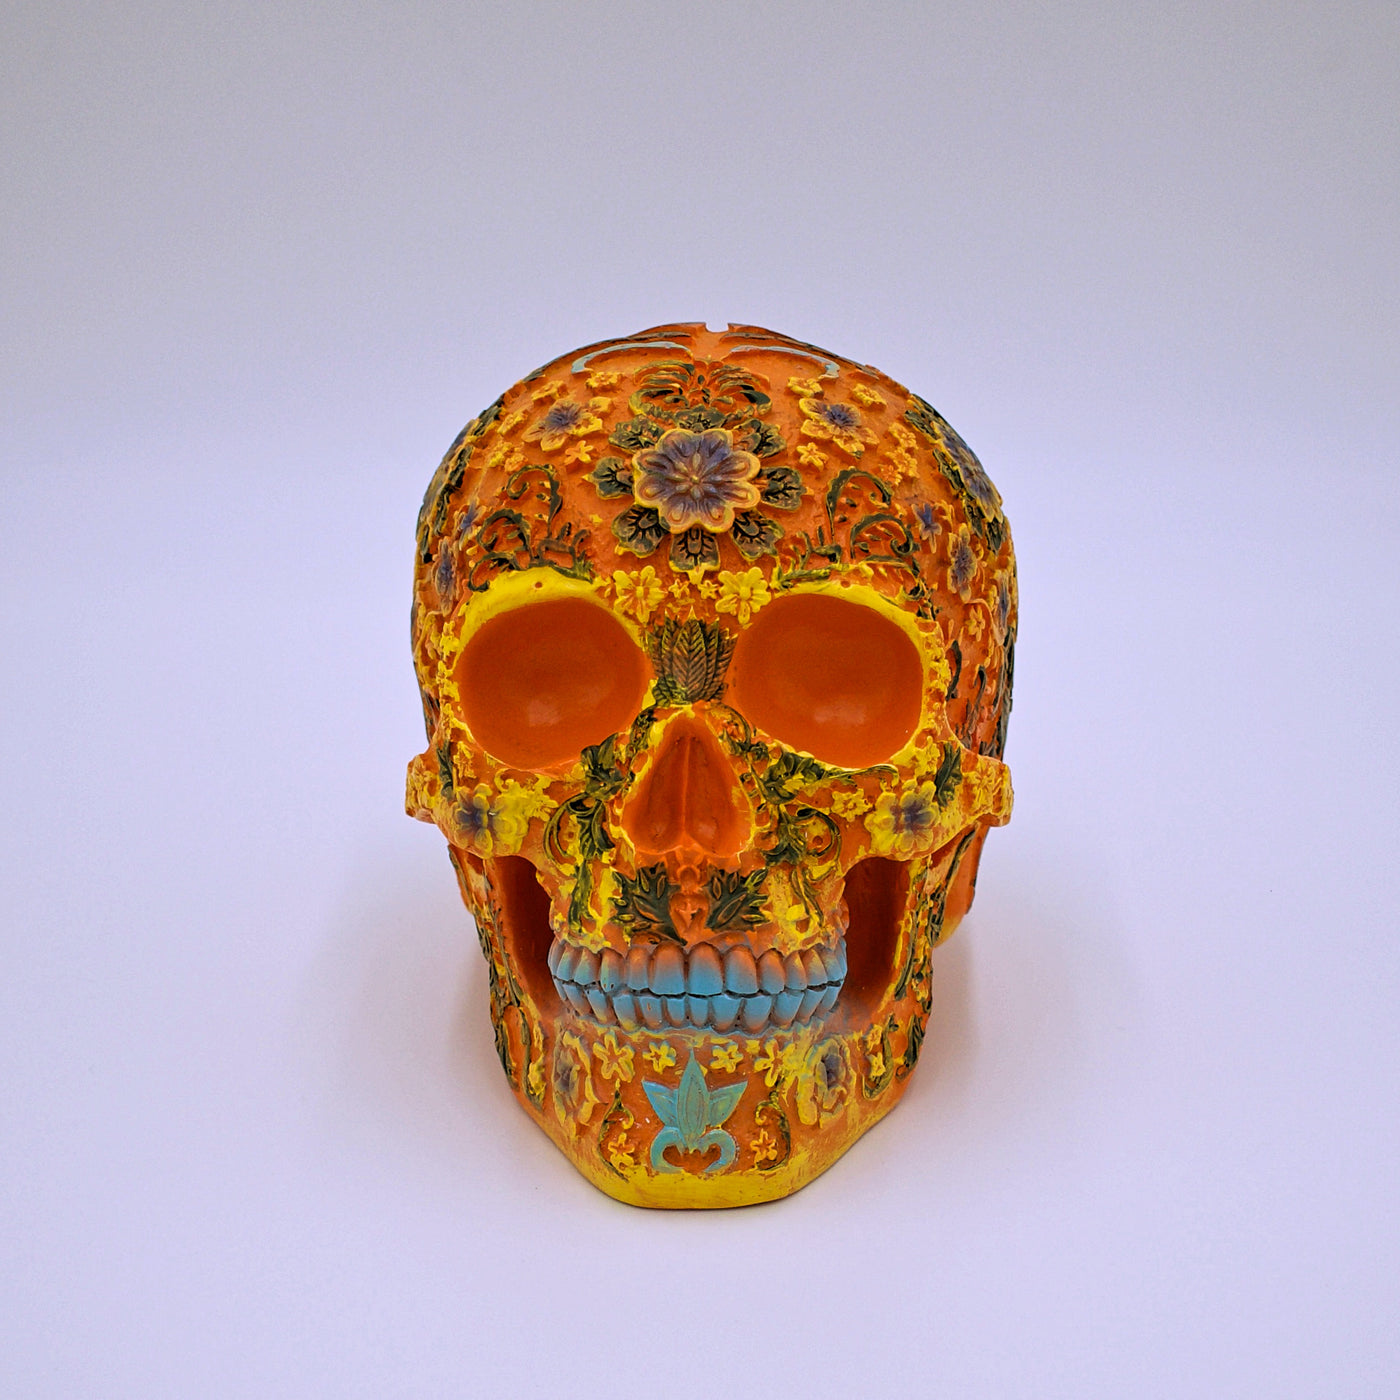 Orange Floral Sugar Skull Sculpture - The Cranio Collections